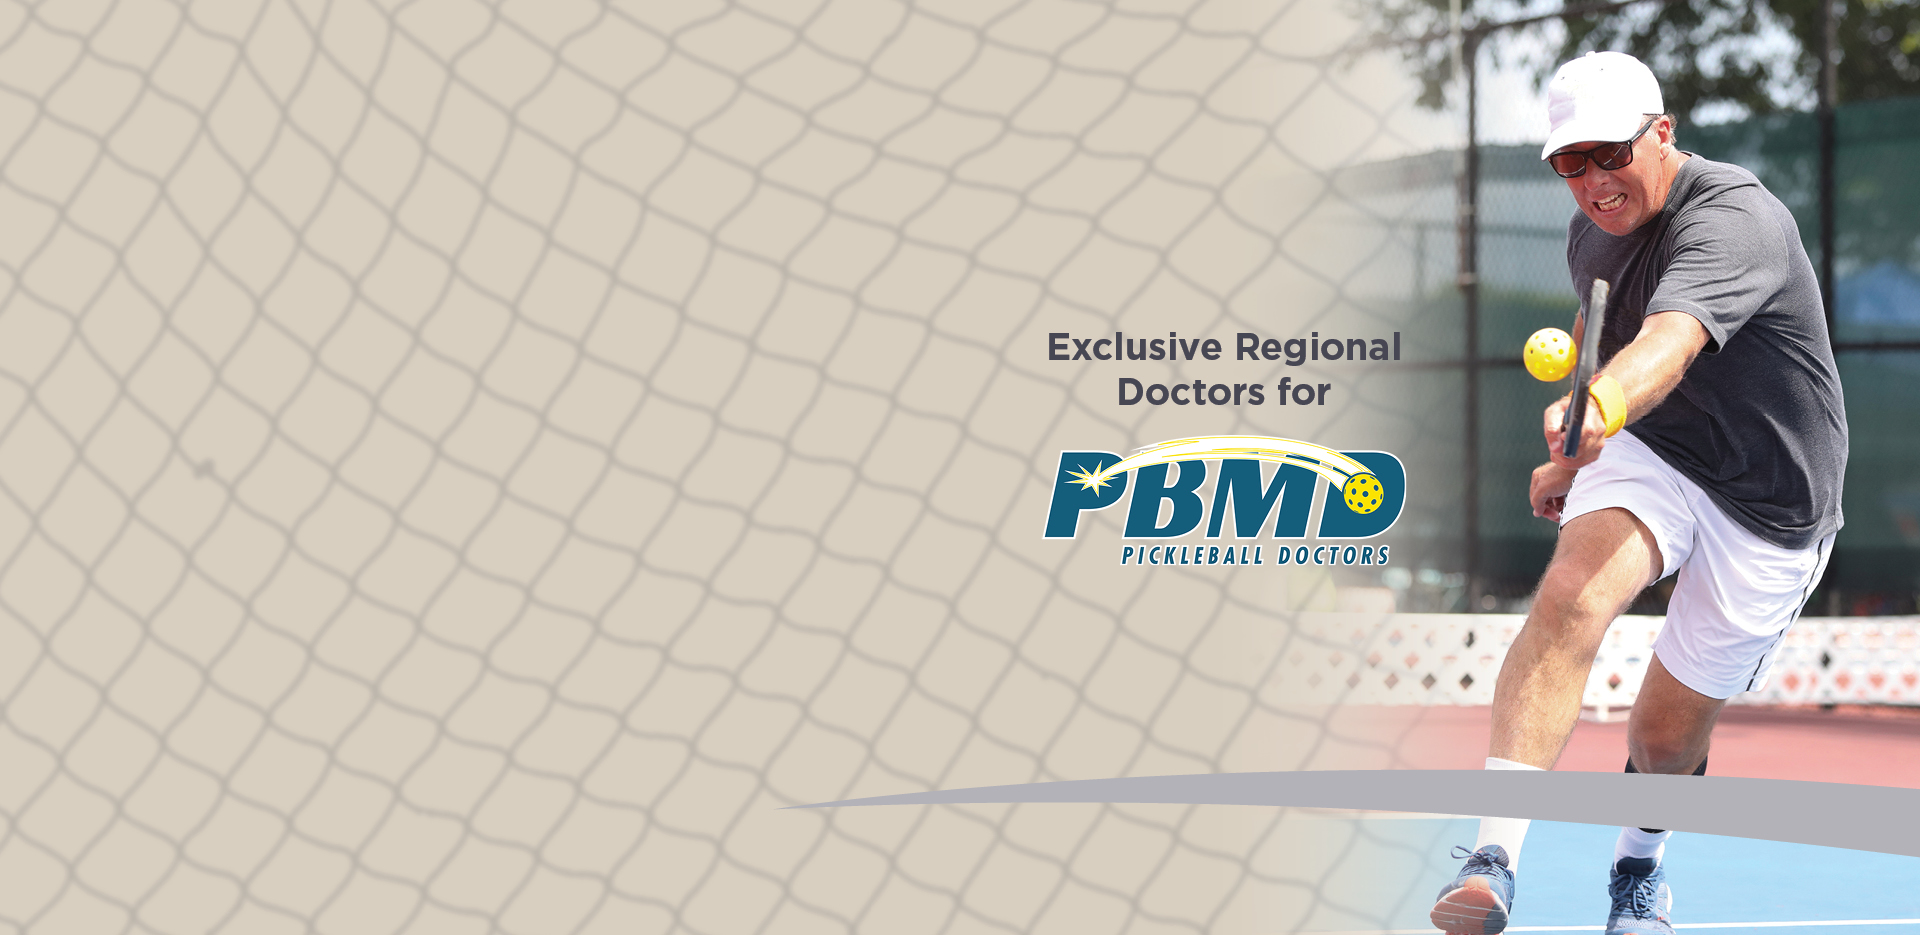 Exclusive Regional Doctors for PBMD